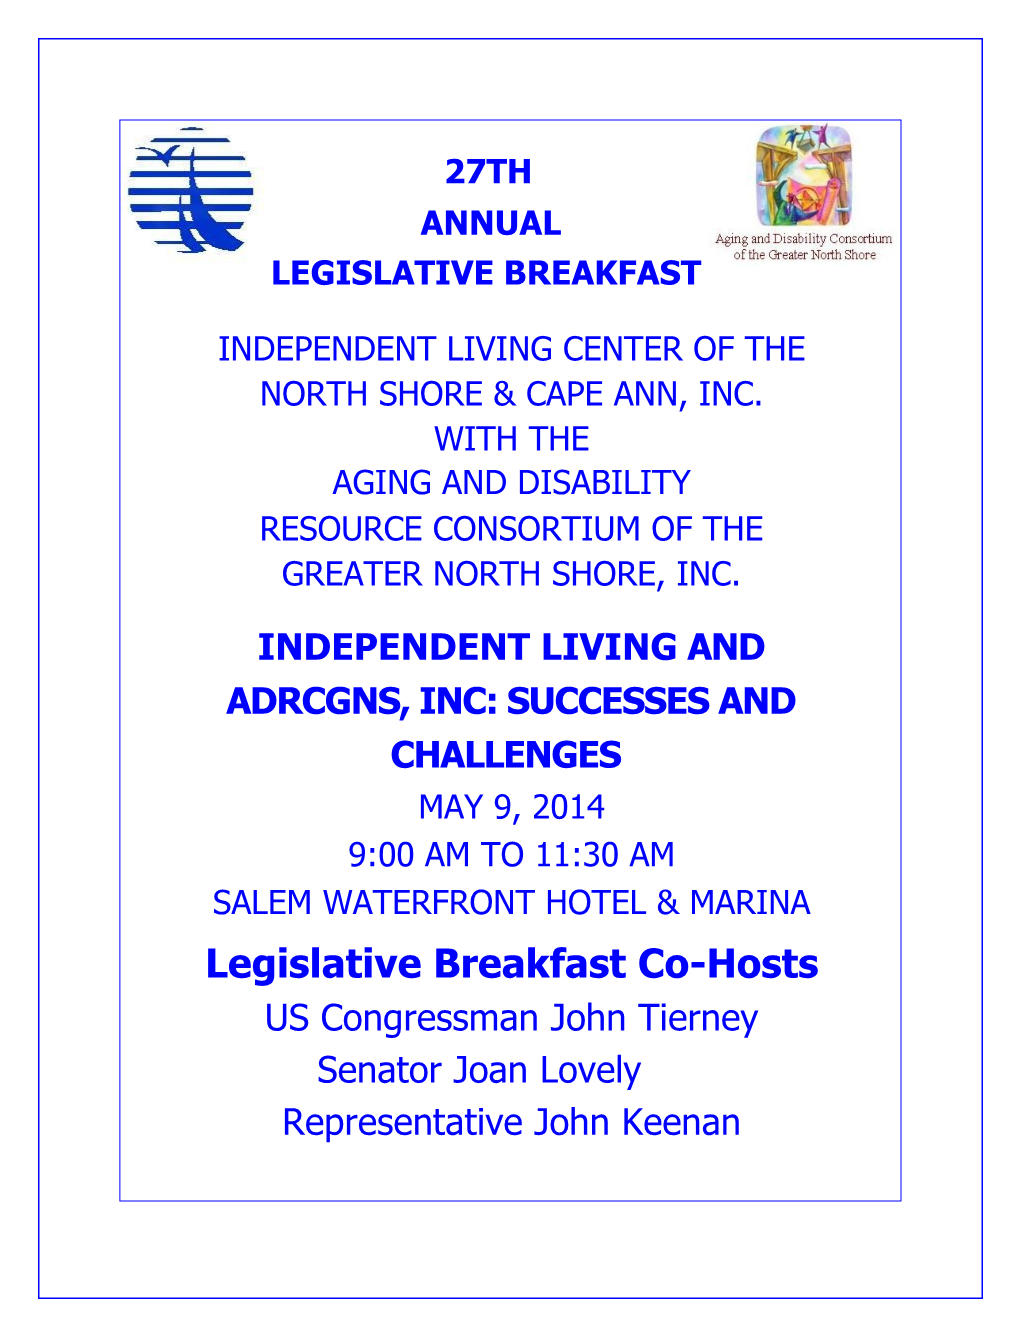 Annual Legislative Breakfast